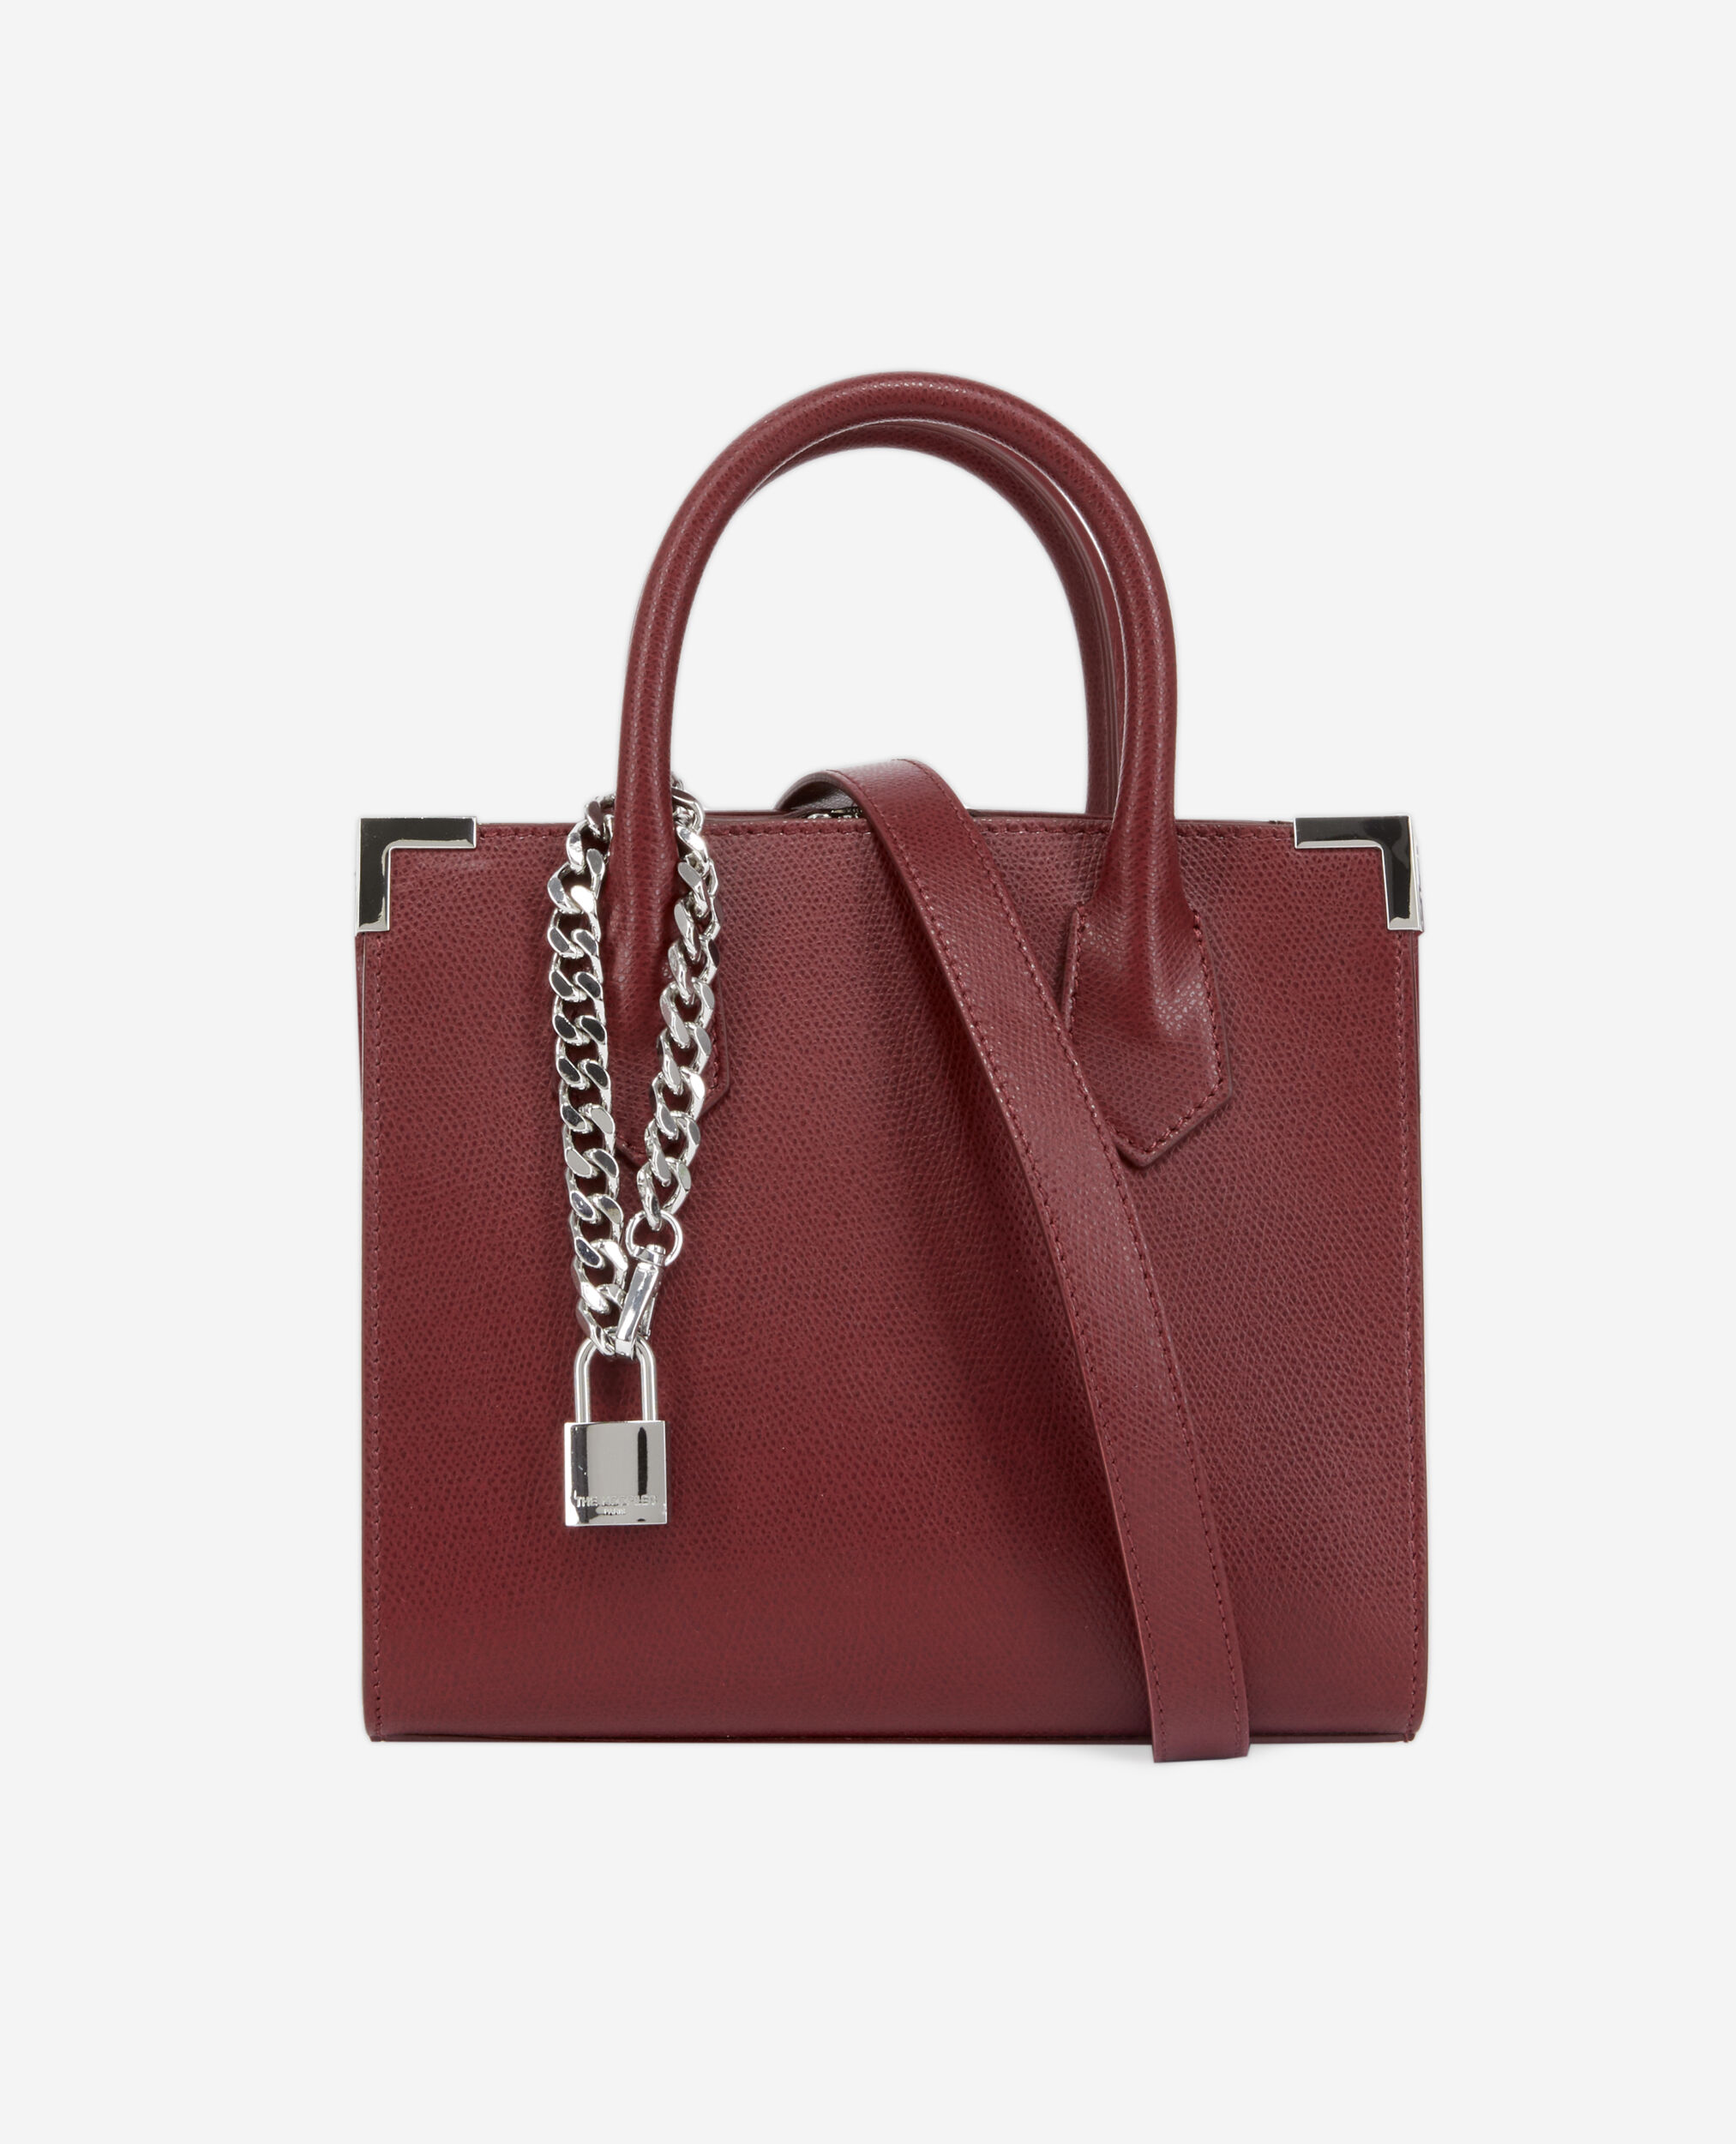 Medium Ming bag in burgundy grained leather, DARK BURGUNDY, hi-res image number null